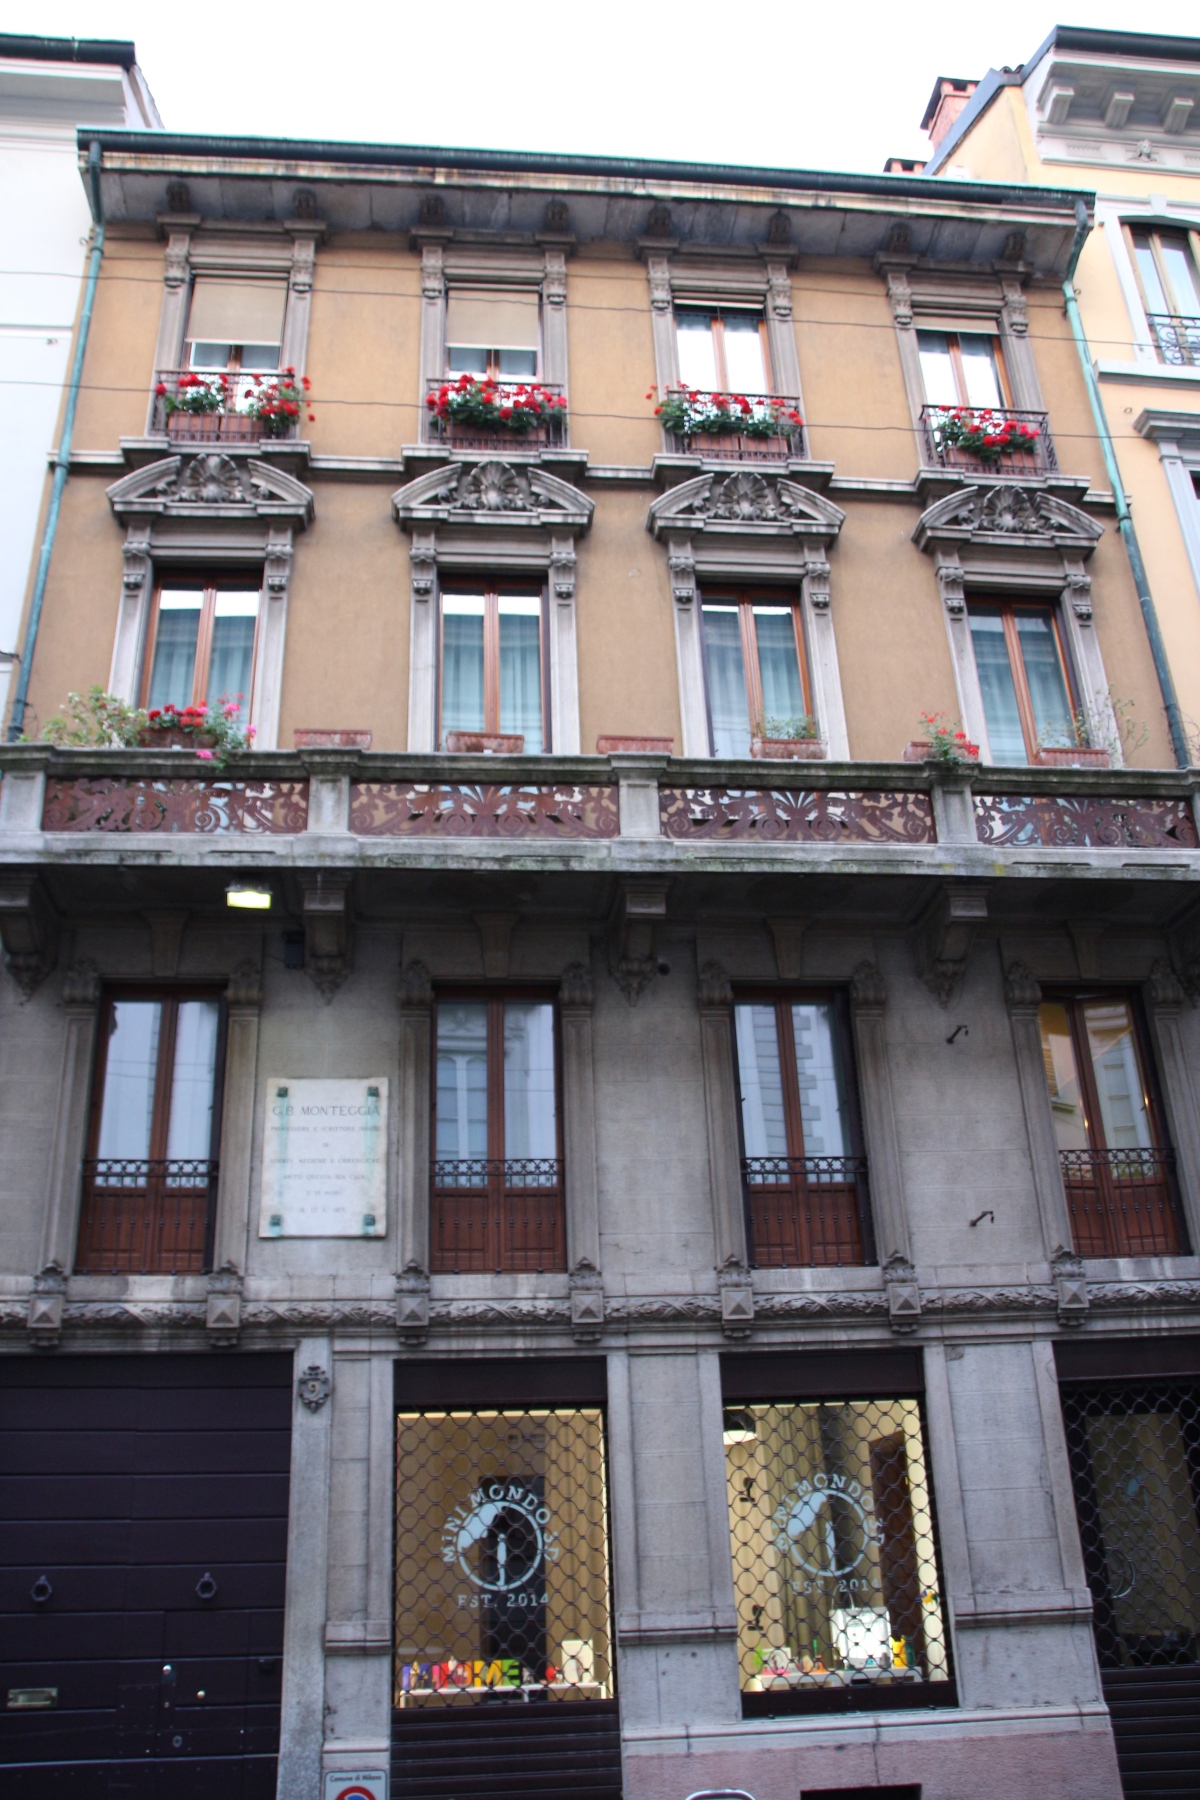 Italy: Guesthouse Ca’Monteggia, Milan